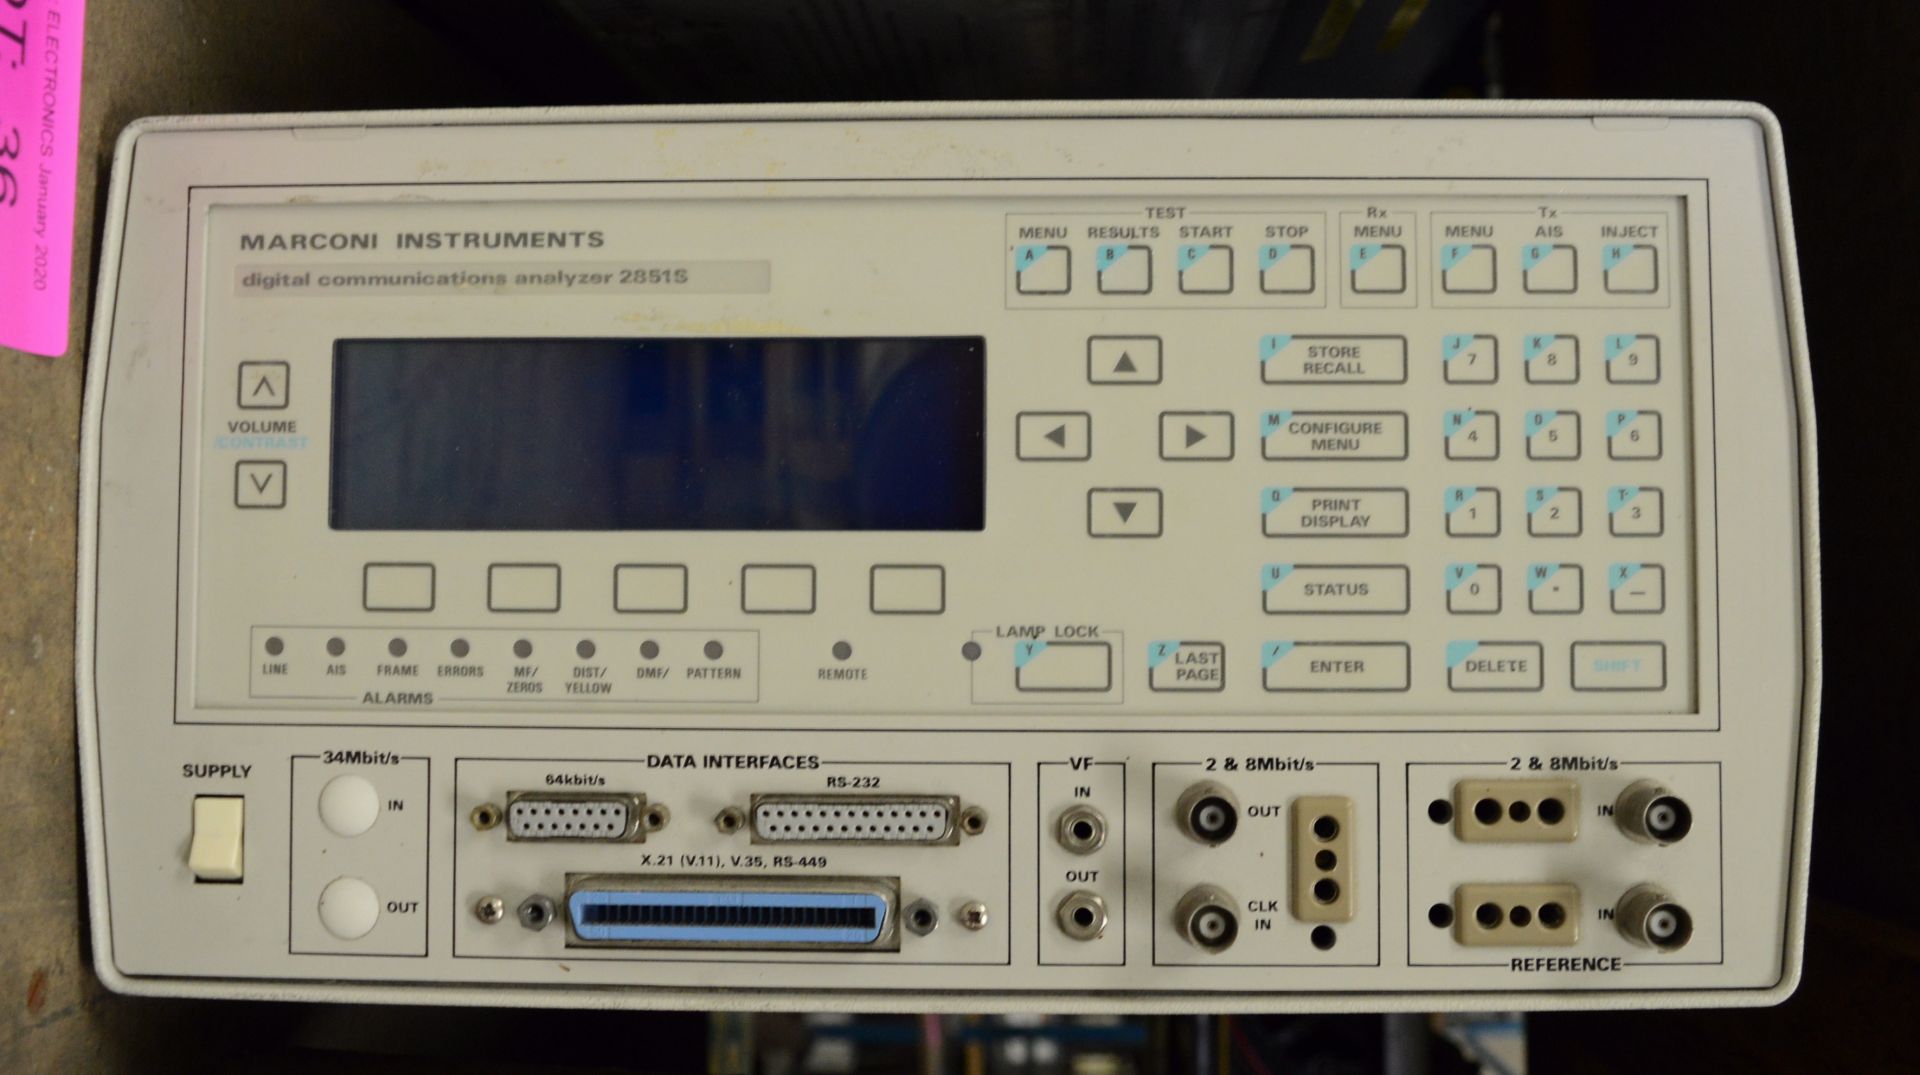 Marconi Instruments 2851S Digital Communications Analyzer. - Image 2 of 2